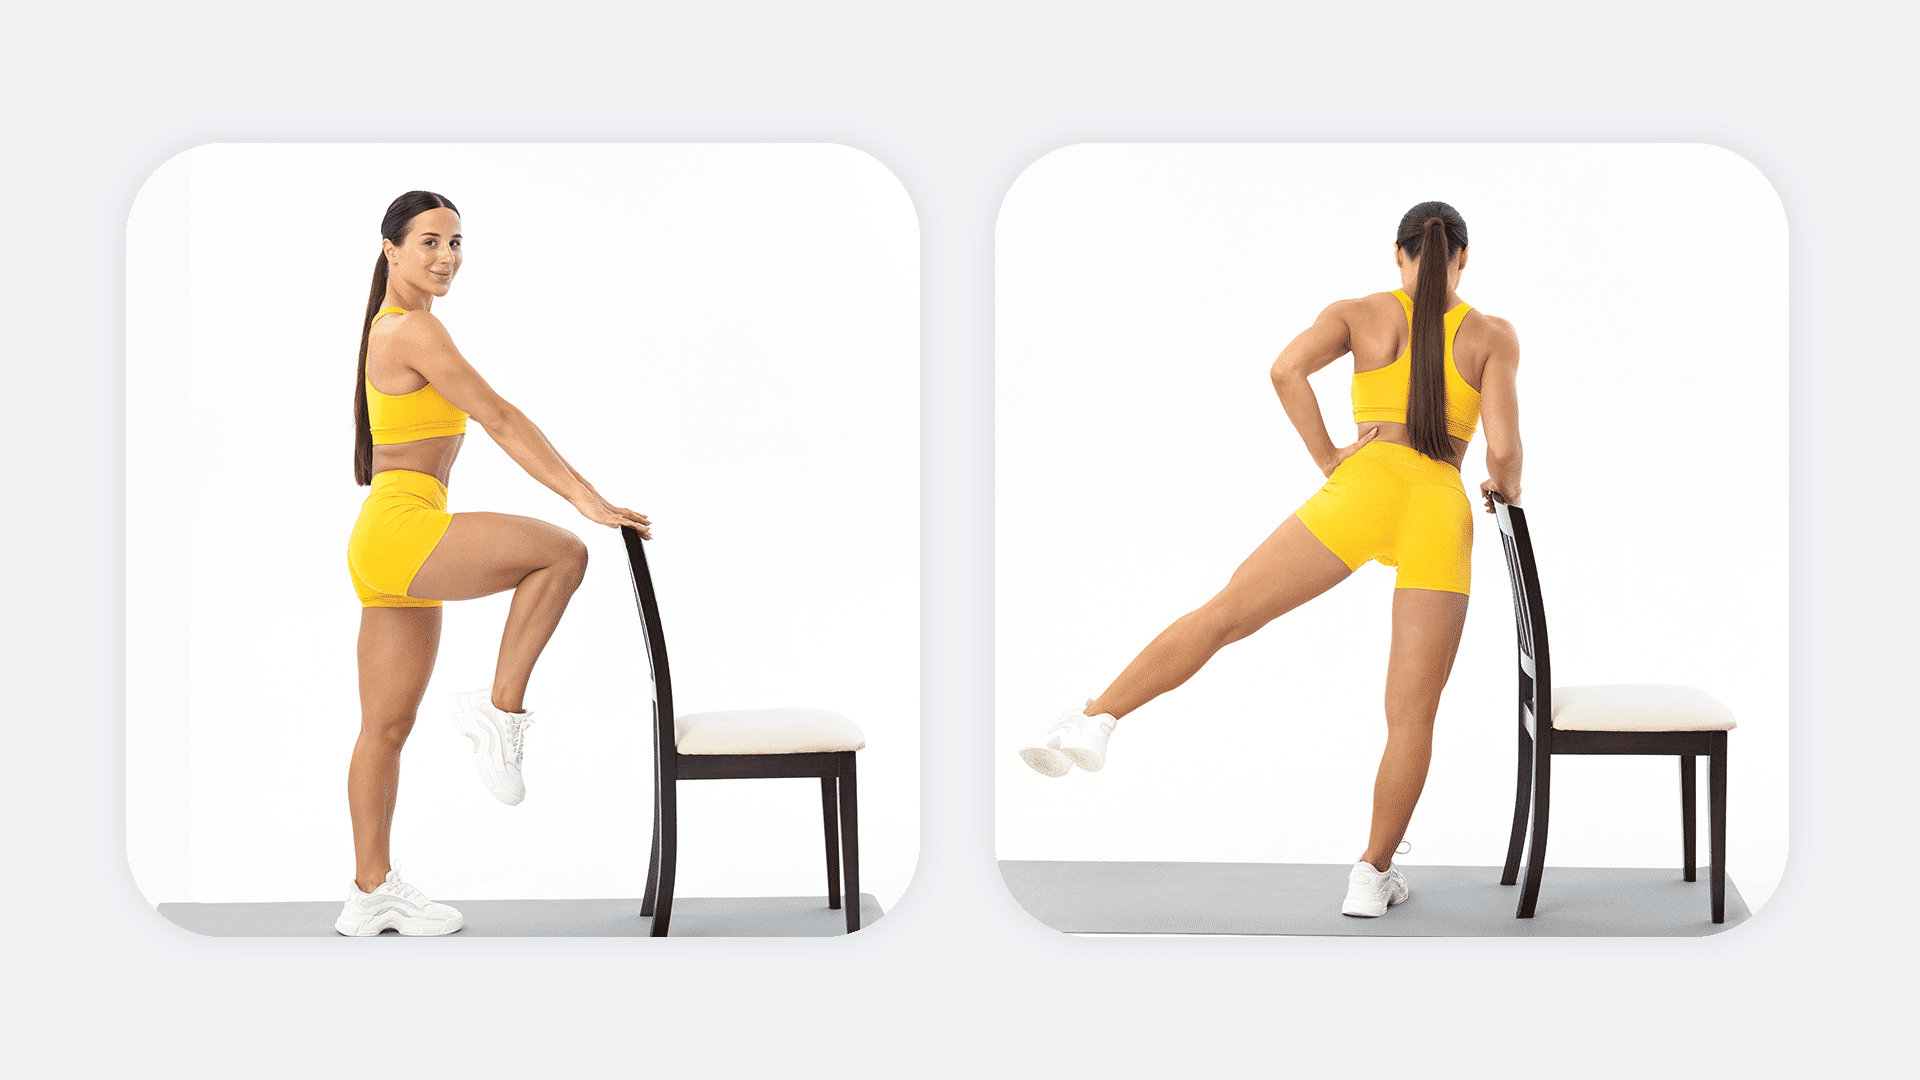 Compass Chair Pose (Eka Pada Parivrtta Utkatasana Surya Yantrasana  Variation) by Bernadette C. - Exercise How-to - Skimble